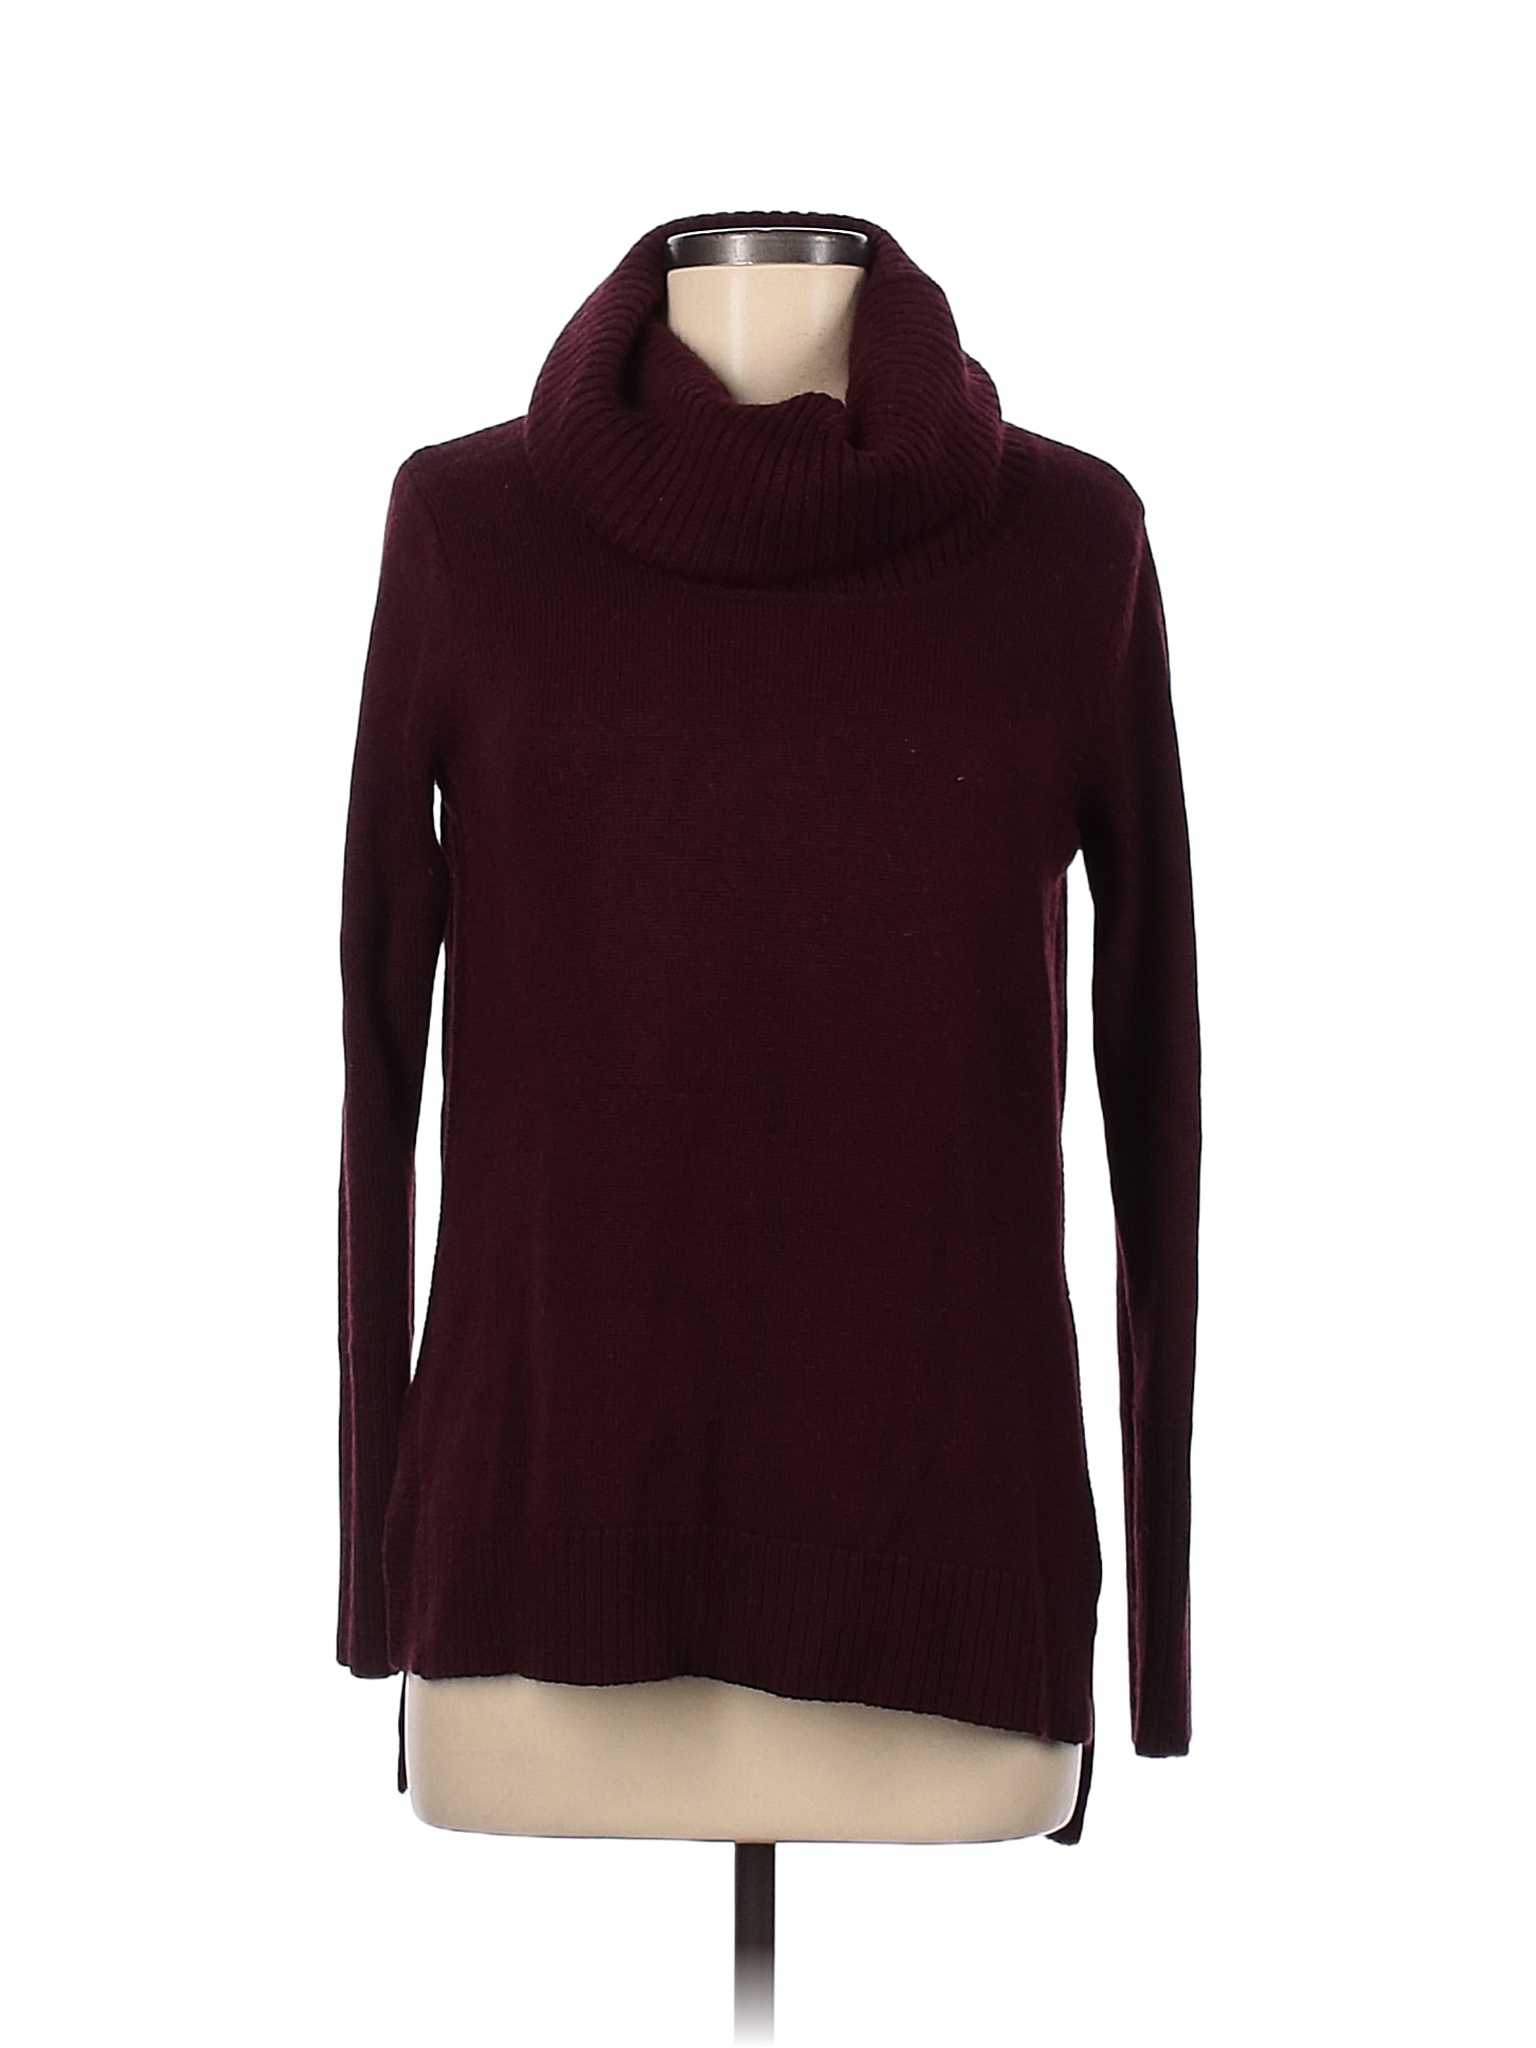 Tahari Color Block Solid Red Burgundy Turtleneck Sweater Size M - 81% ...